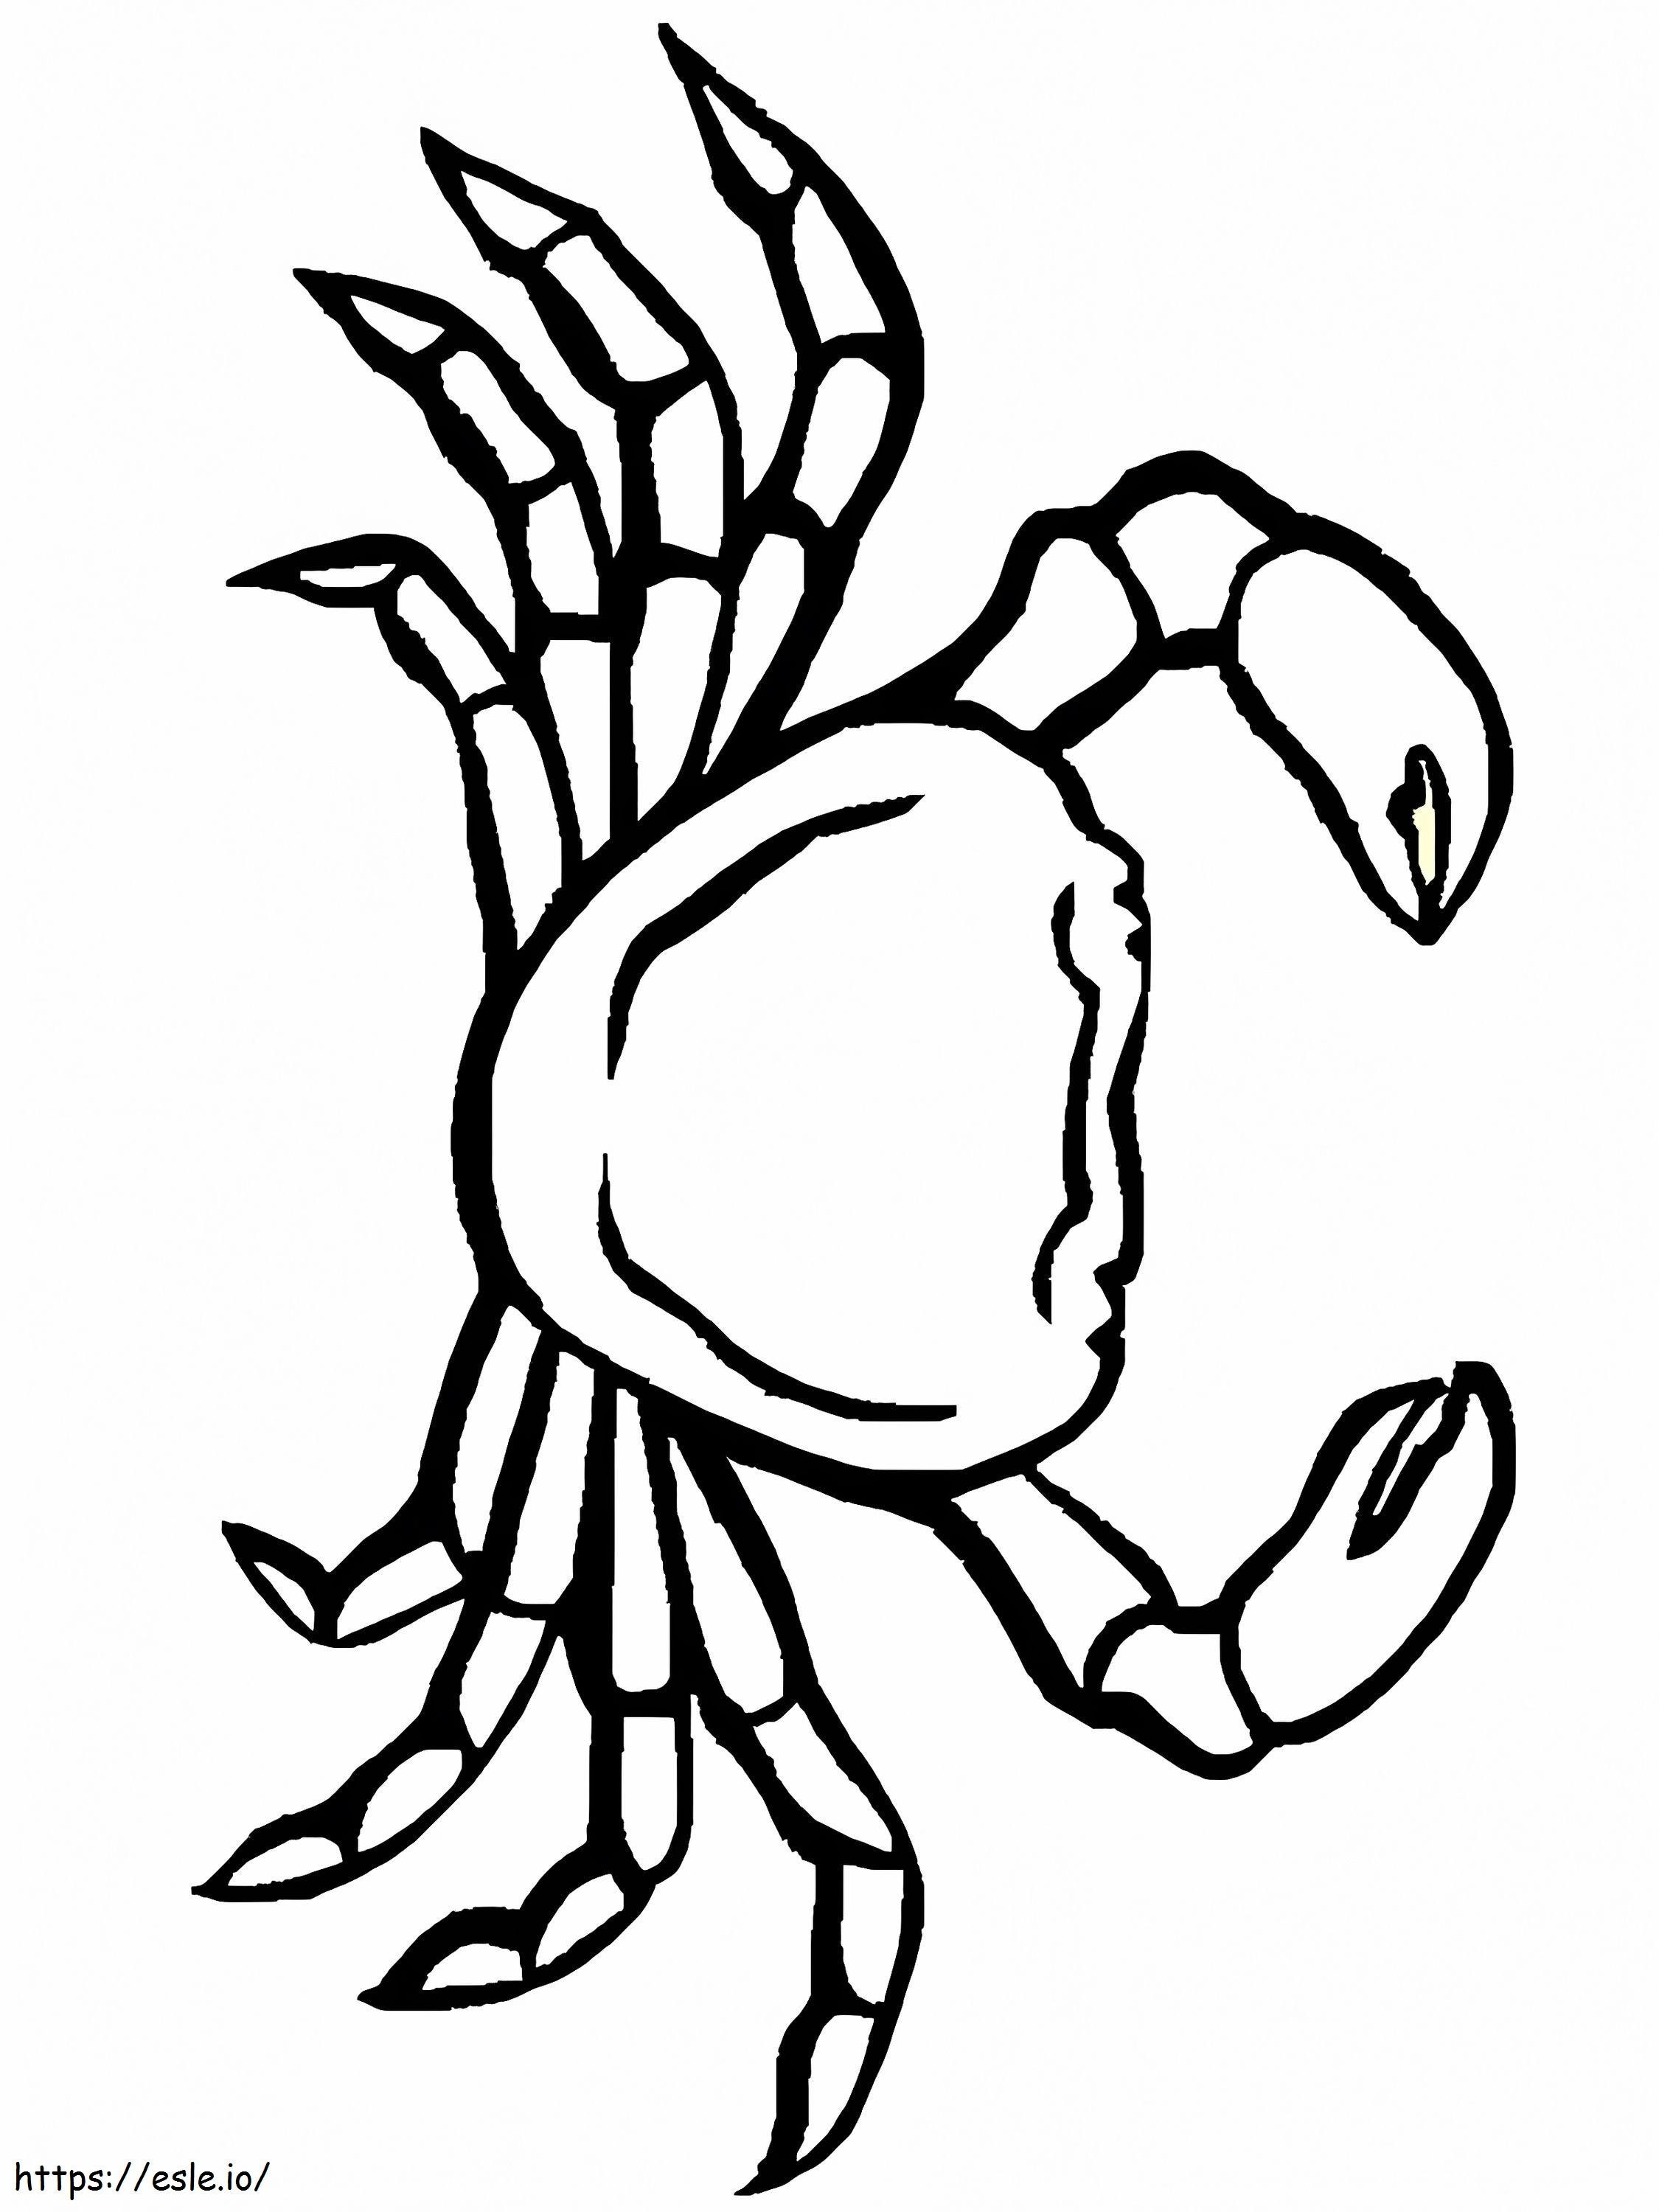 Normal Crab coloring page